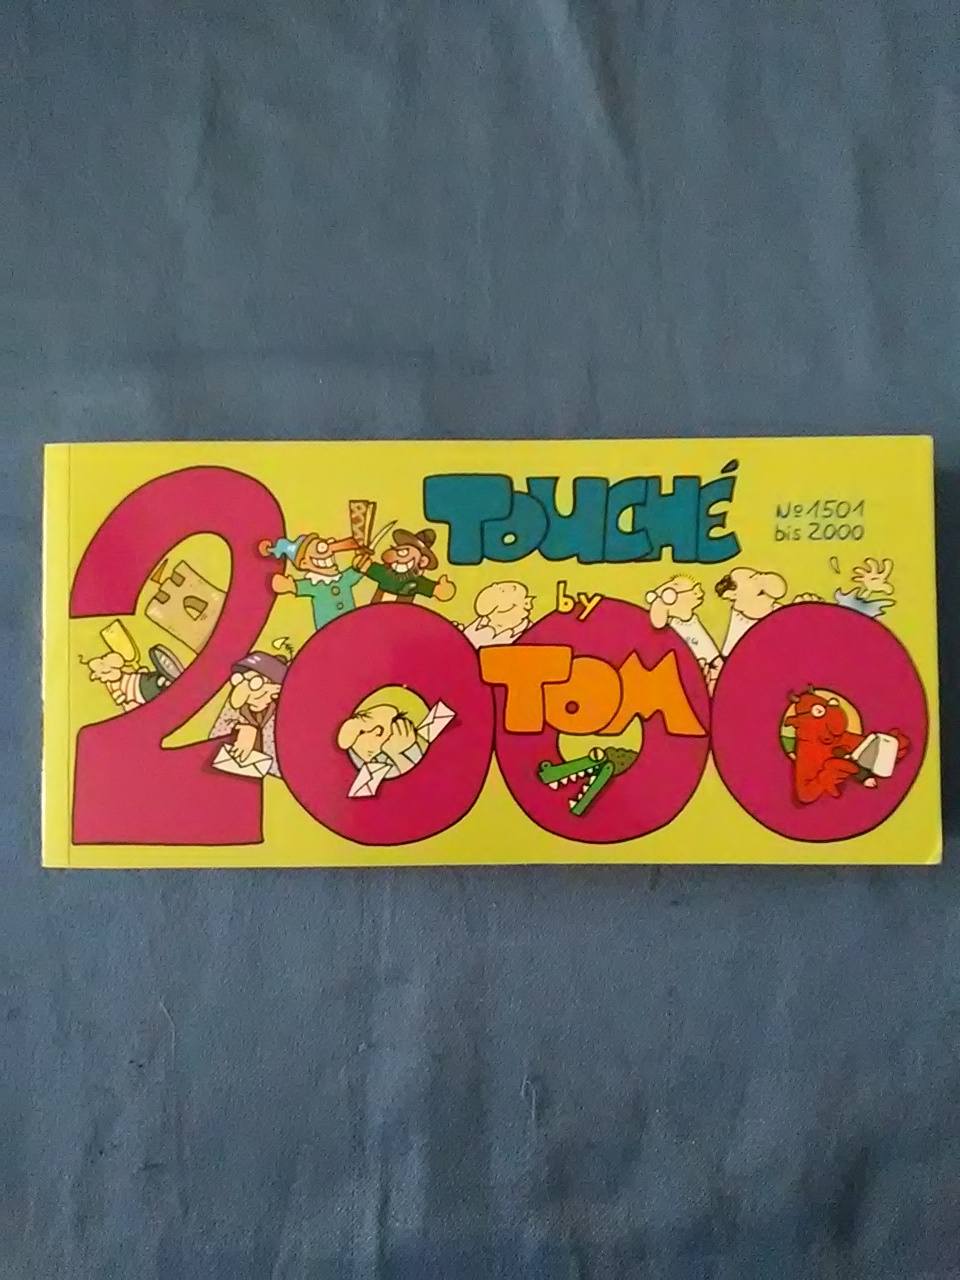 Touché 2000 : No. 1501 bis 2000. by 1. Aufl. - Tom